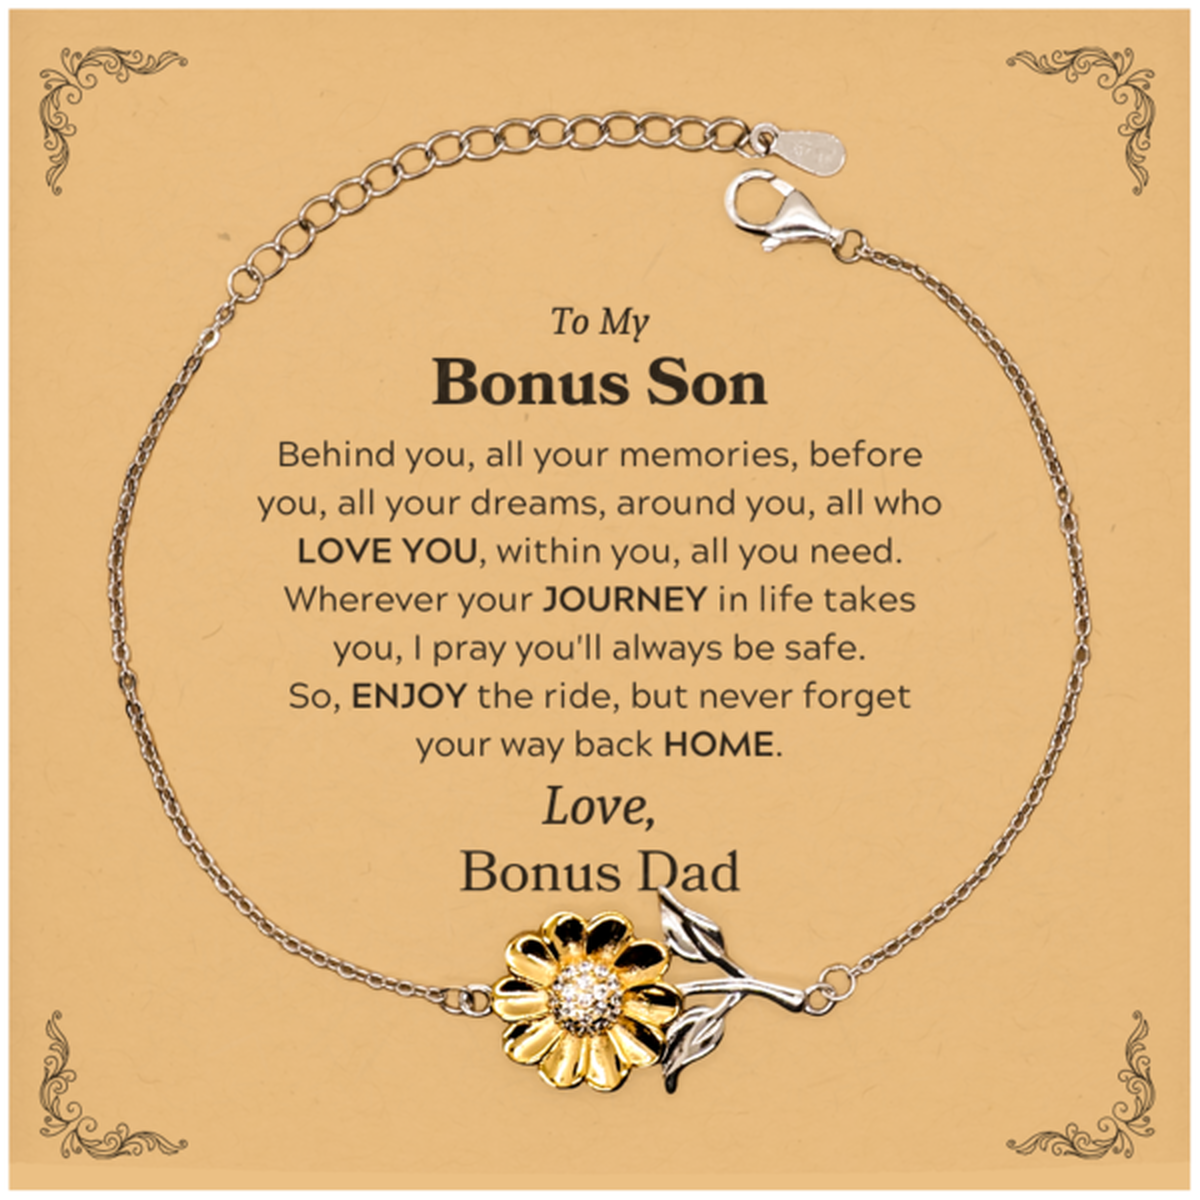 To My Bonus Son Graduation Gifts from Bonus Dad, Bonus Son Sunflower Bracelet Christmas Birthday Gifts for Bonus Son Behind you, all your memories, before you, all your dreams. Love, Bonus Dad